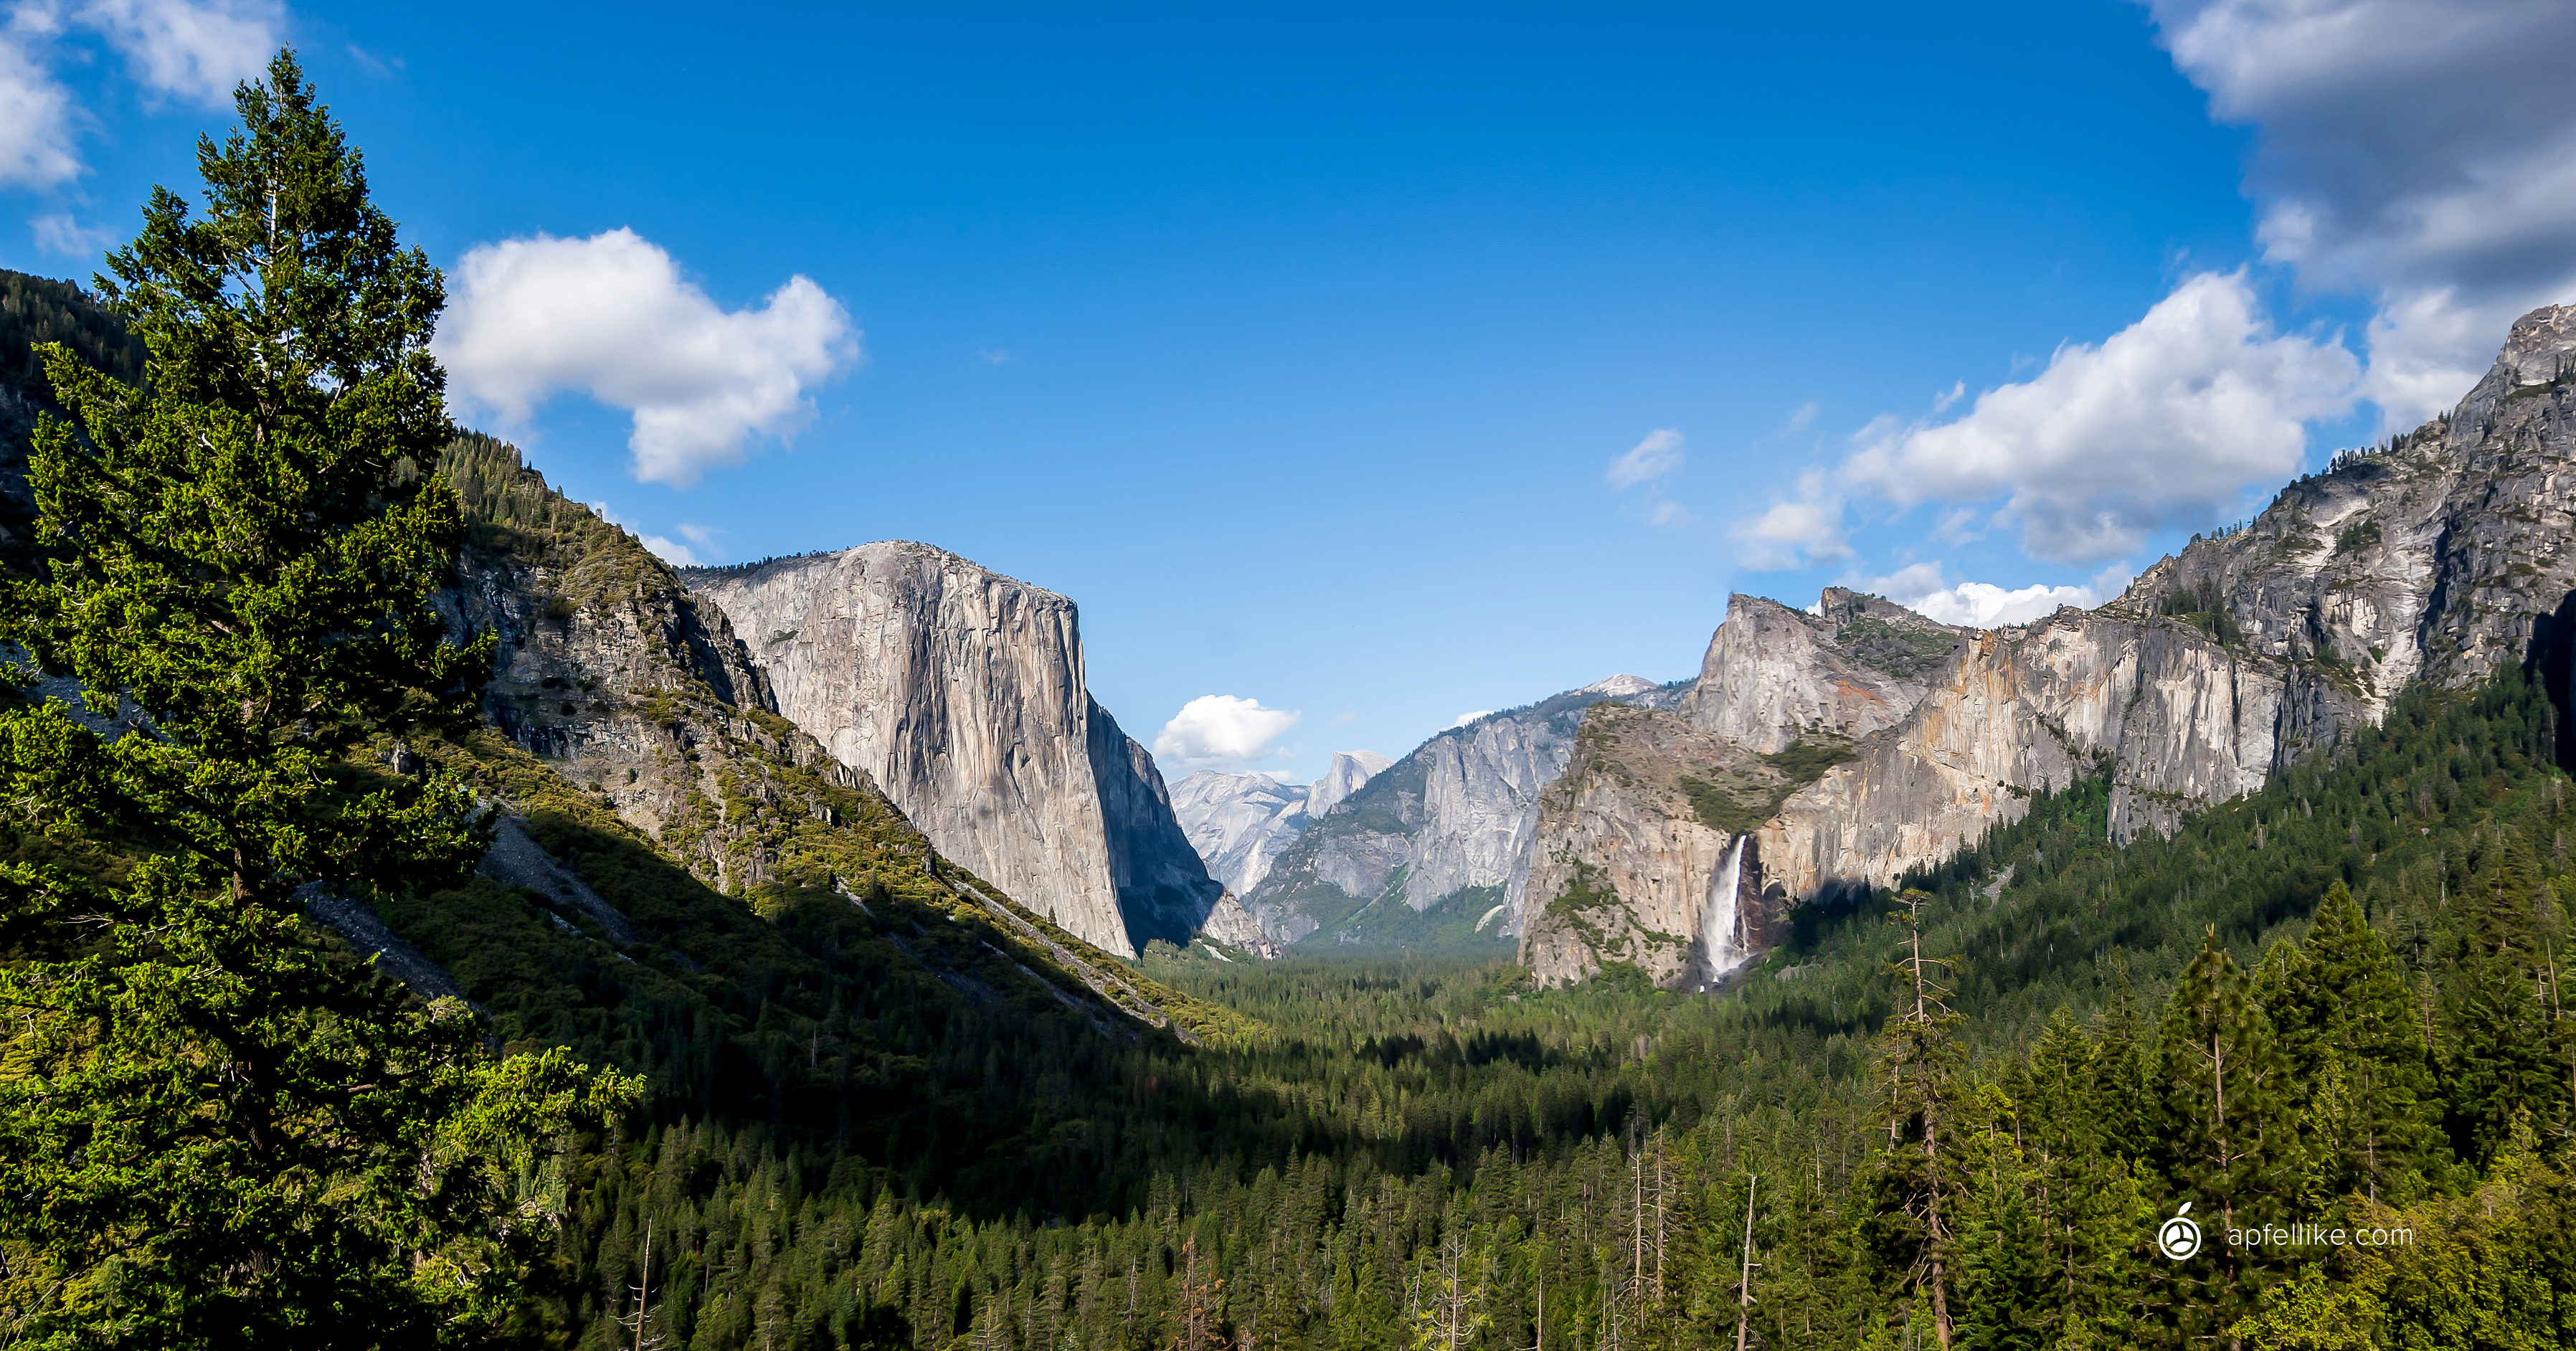 OS X Yosemite Wallpaper by vndesign on DeviantArt